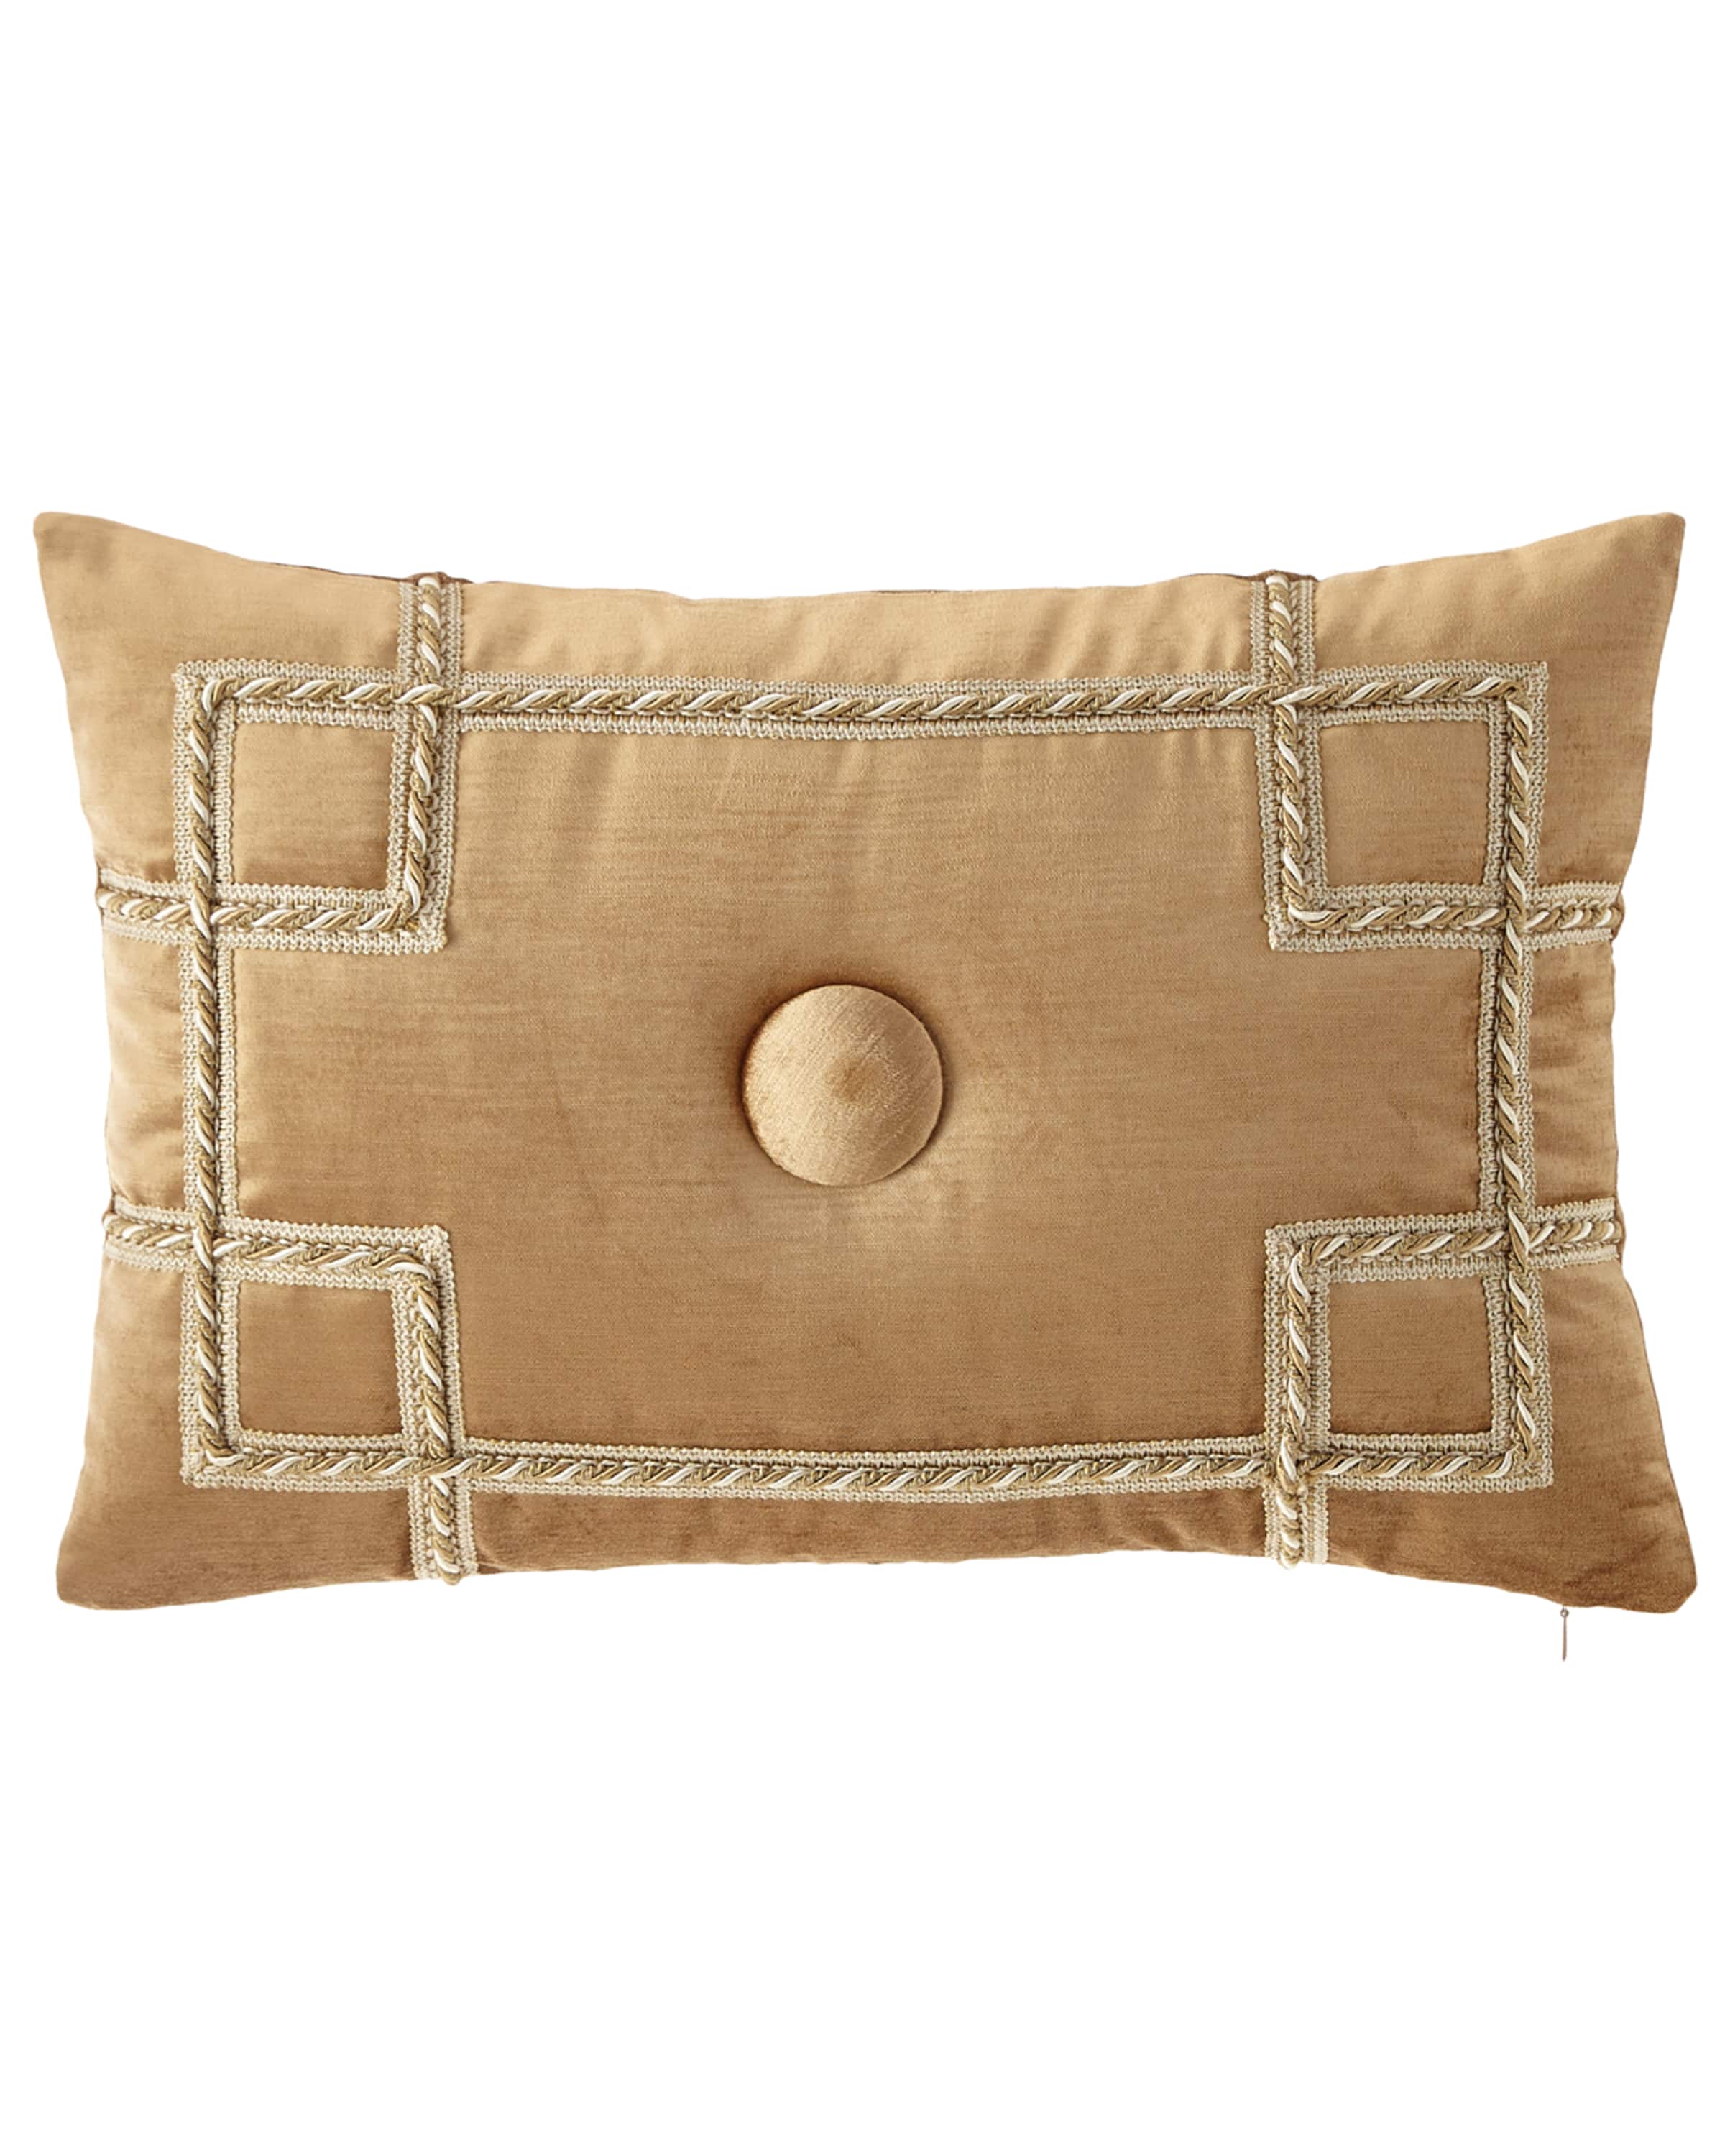 Sweet Dreams Minako Velvet Oblong Pillow with Button Center